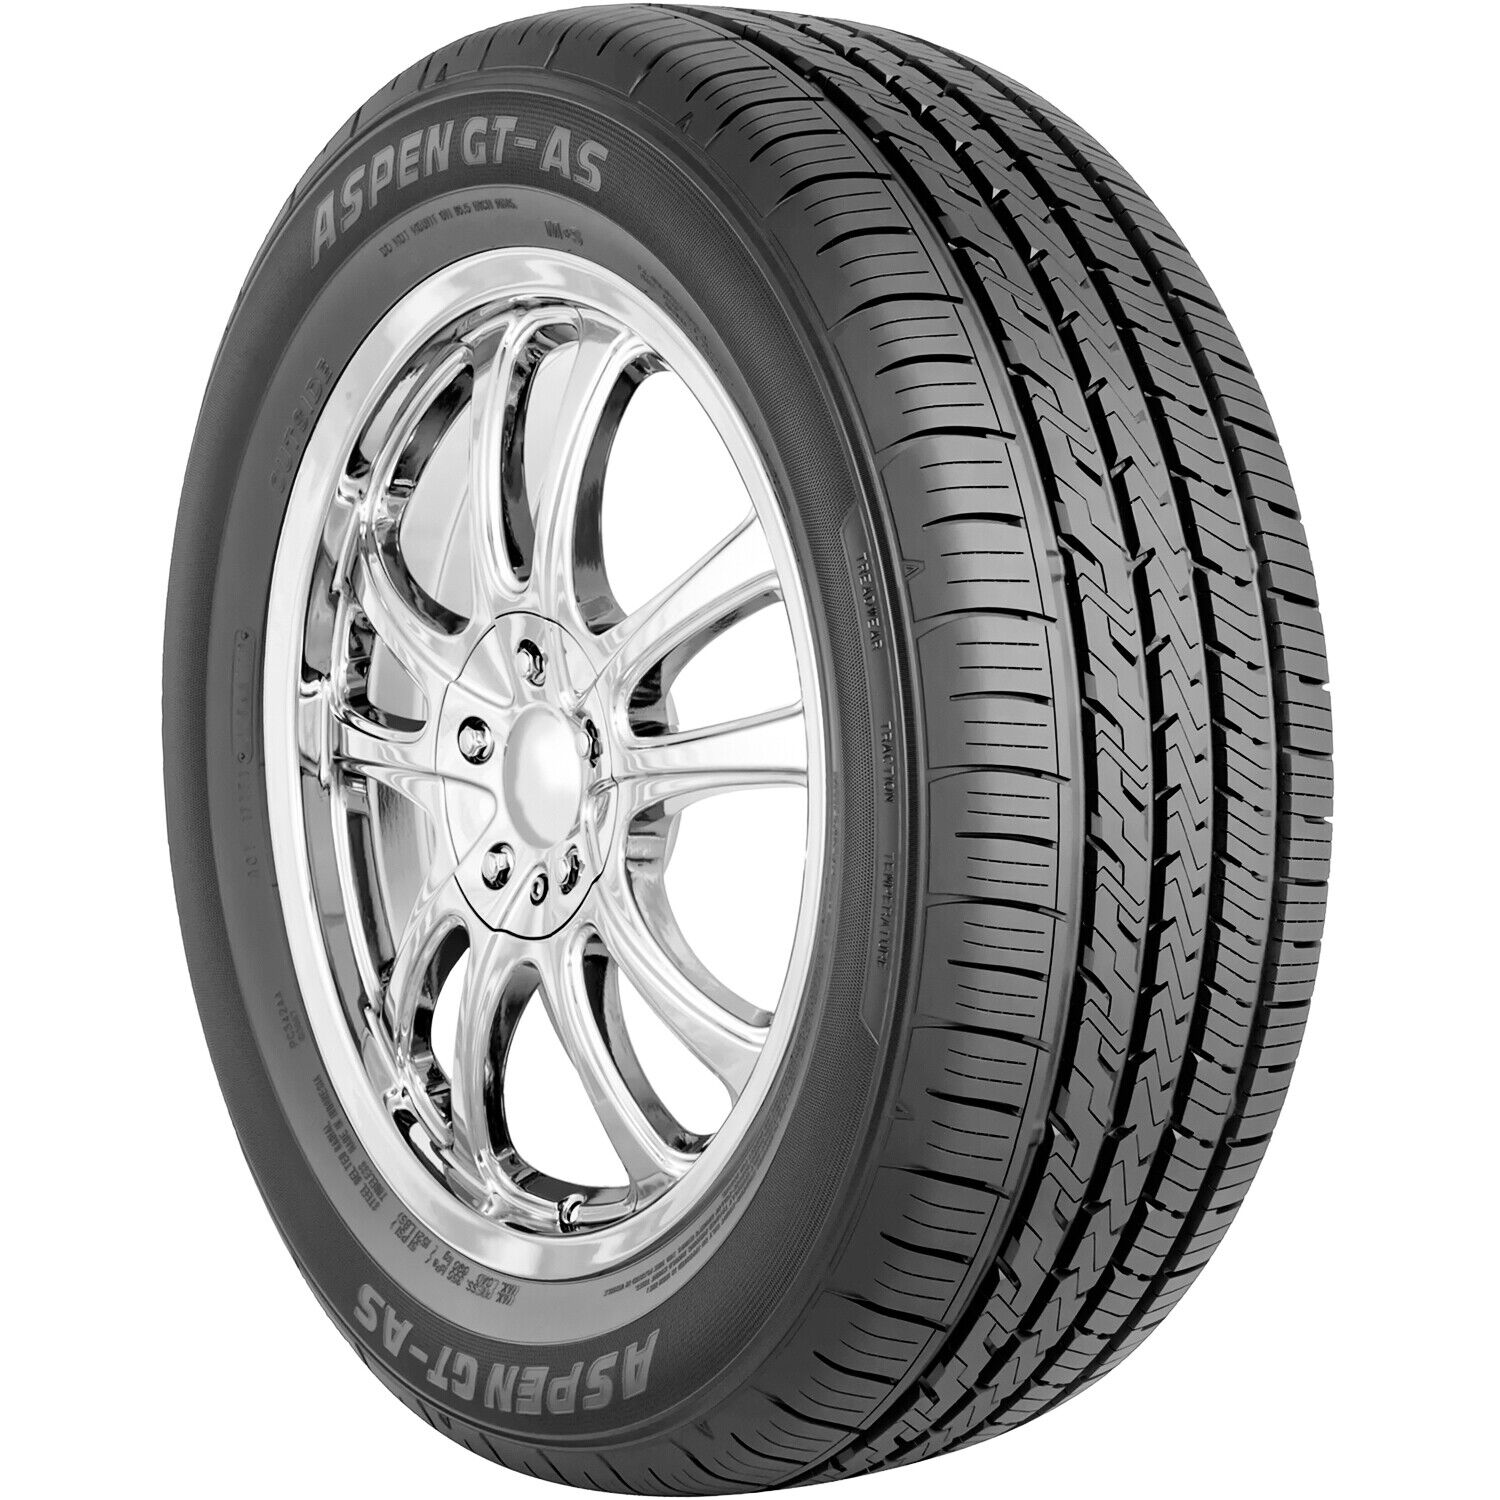 Tire Aspen GT-AS 205/60R15 91H AS A/S All Season